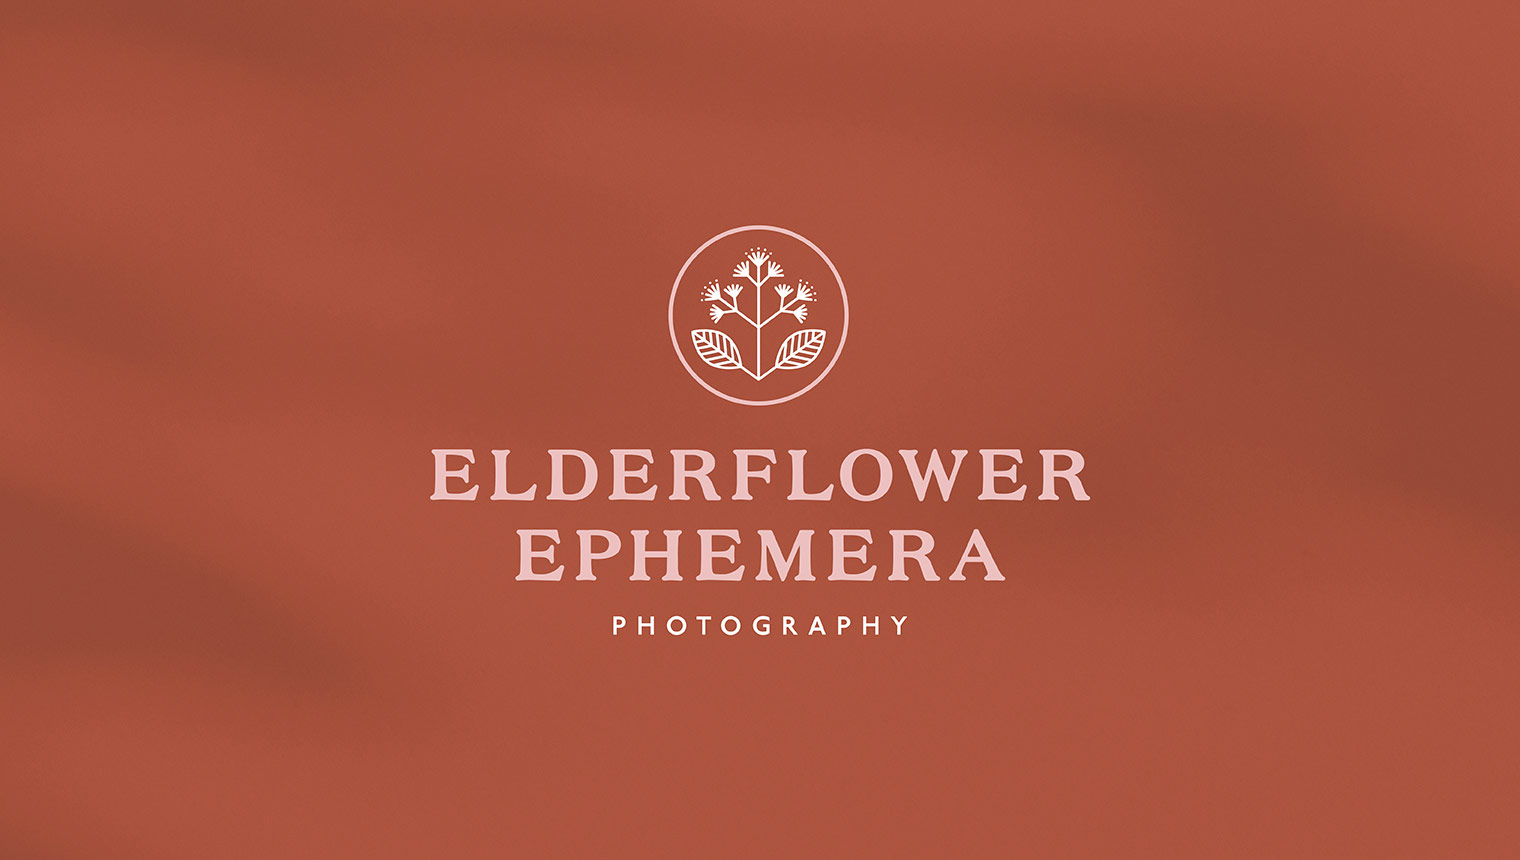 Vintage inspired logotype featuring floral emblem for film photographer elderflower ephemera